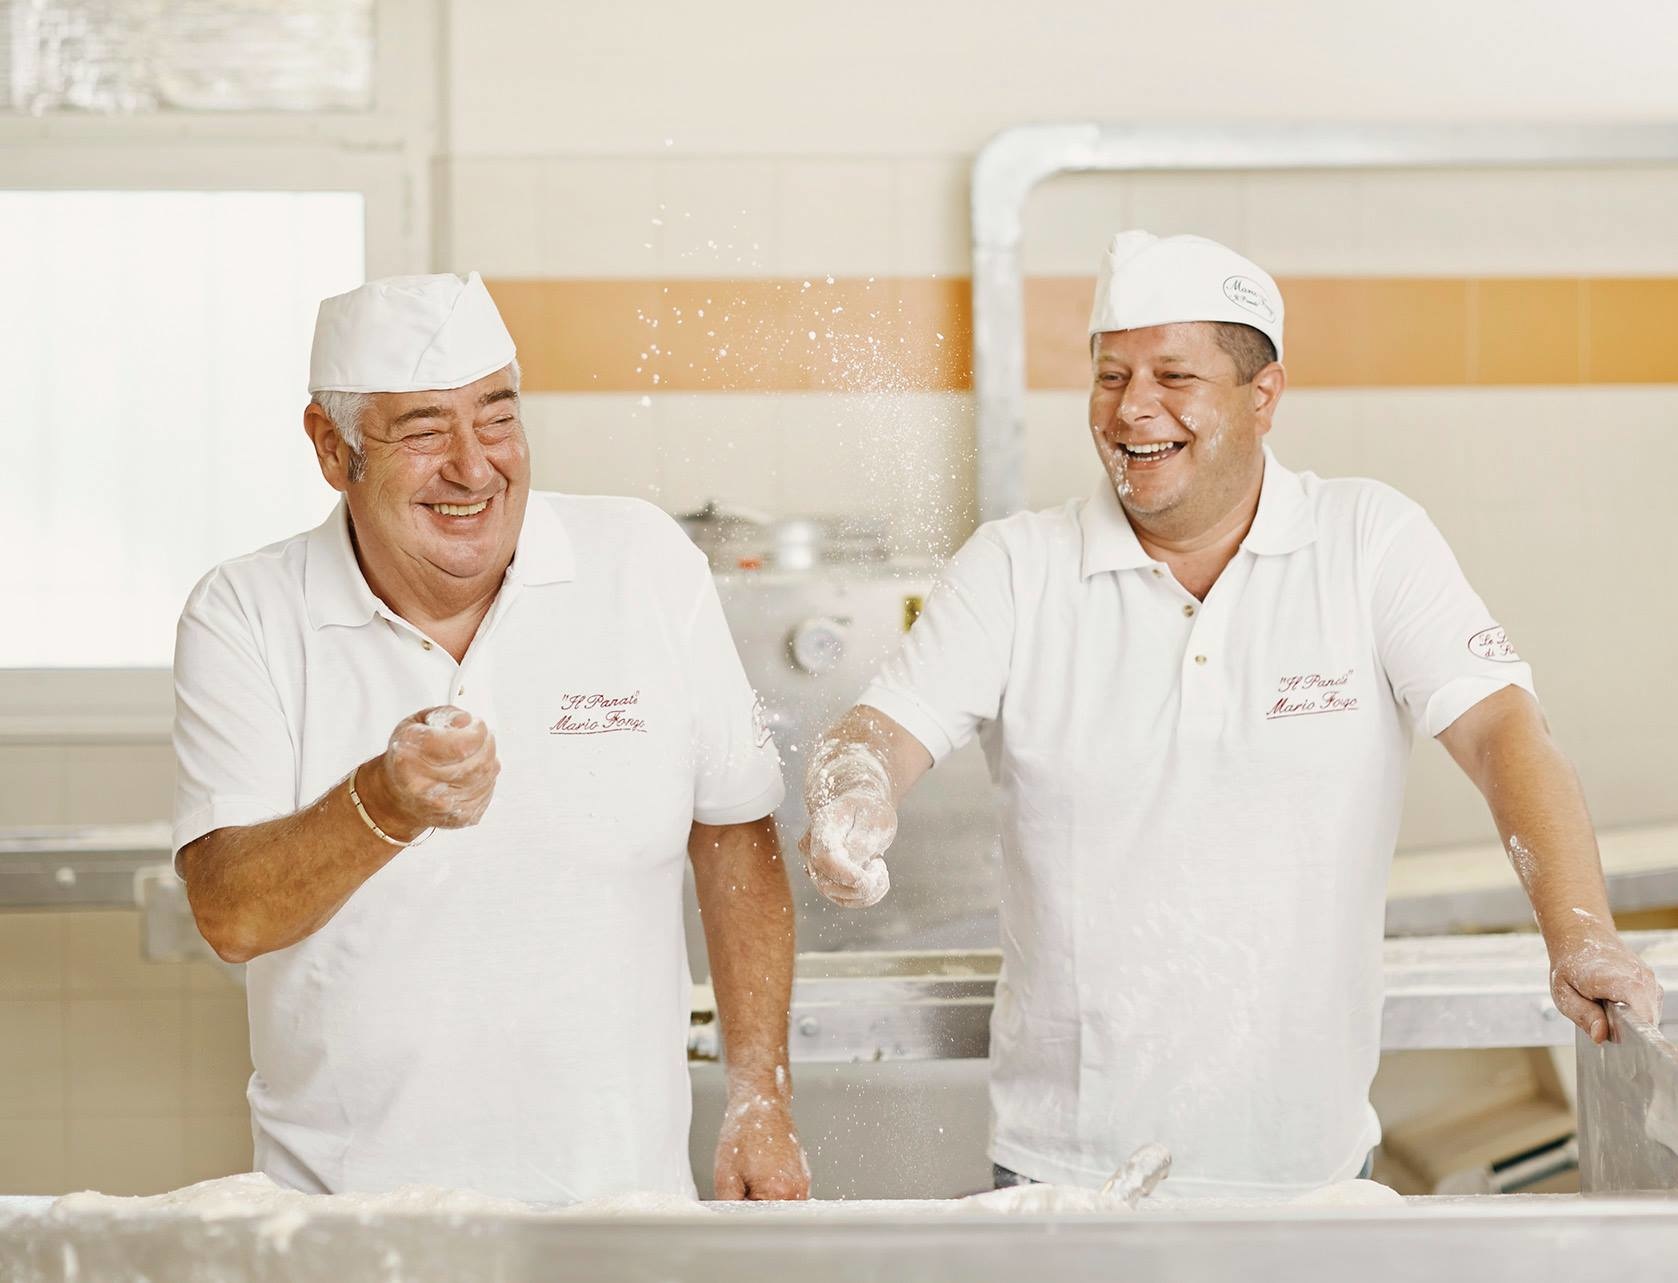 Mario Fongo "Mario Fongo" Stretched Breadsticks "Grissini" Corn/Mais Flour 24/200gr